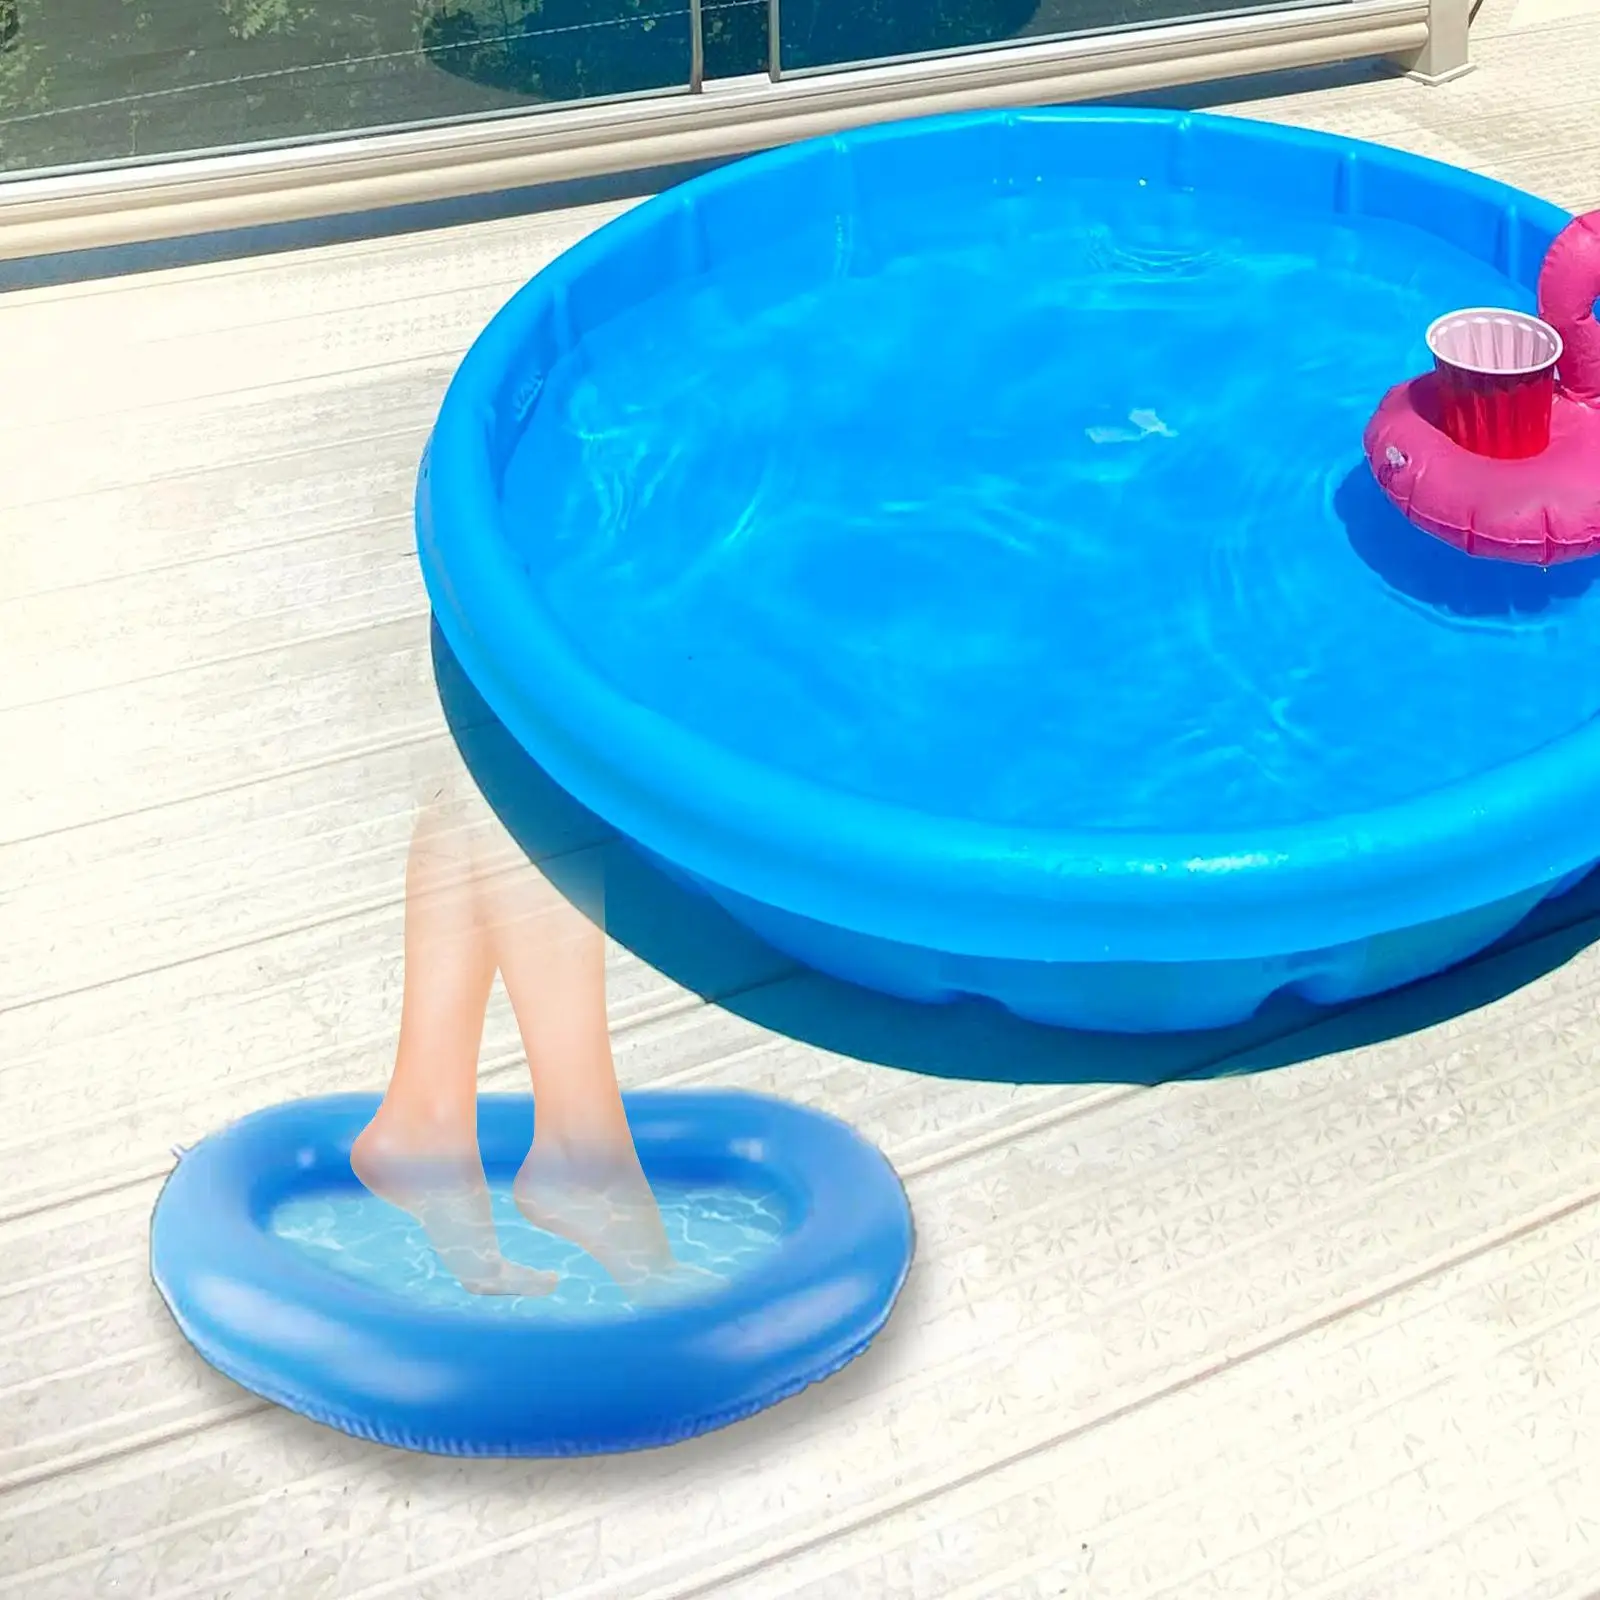 Inflatable Foot Bath Footbath Foot Soaking Bath Basin Anit Slip Accessories for Rinsing Feet before Entering Pool Blue Portable